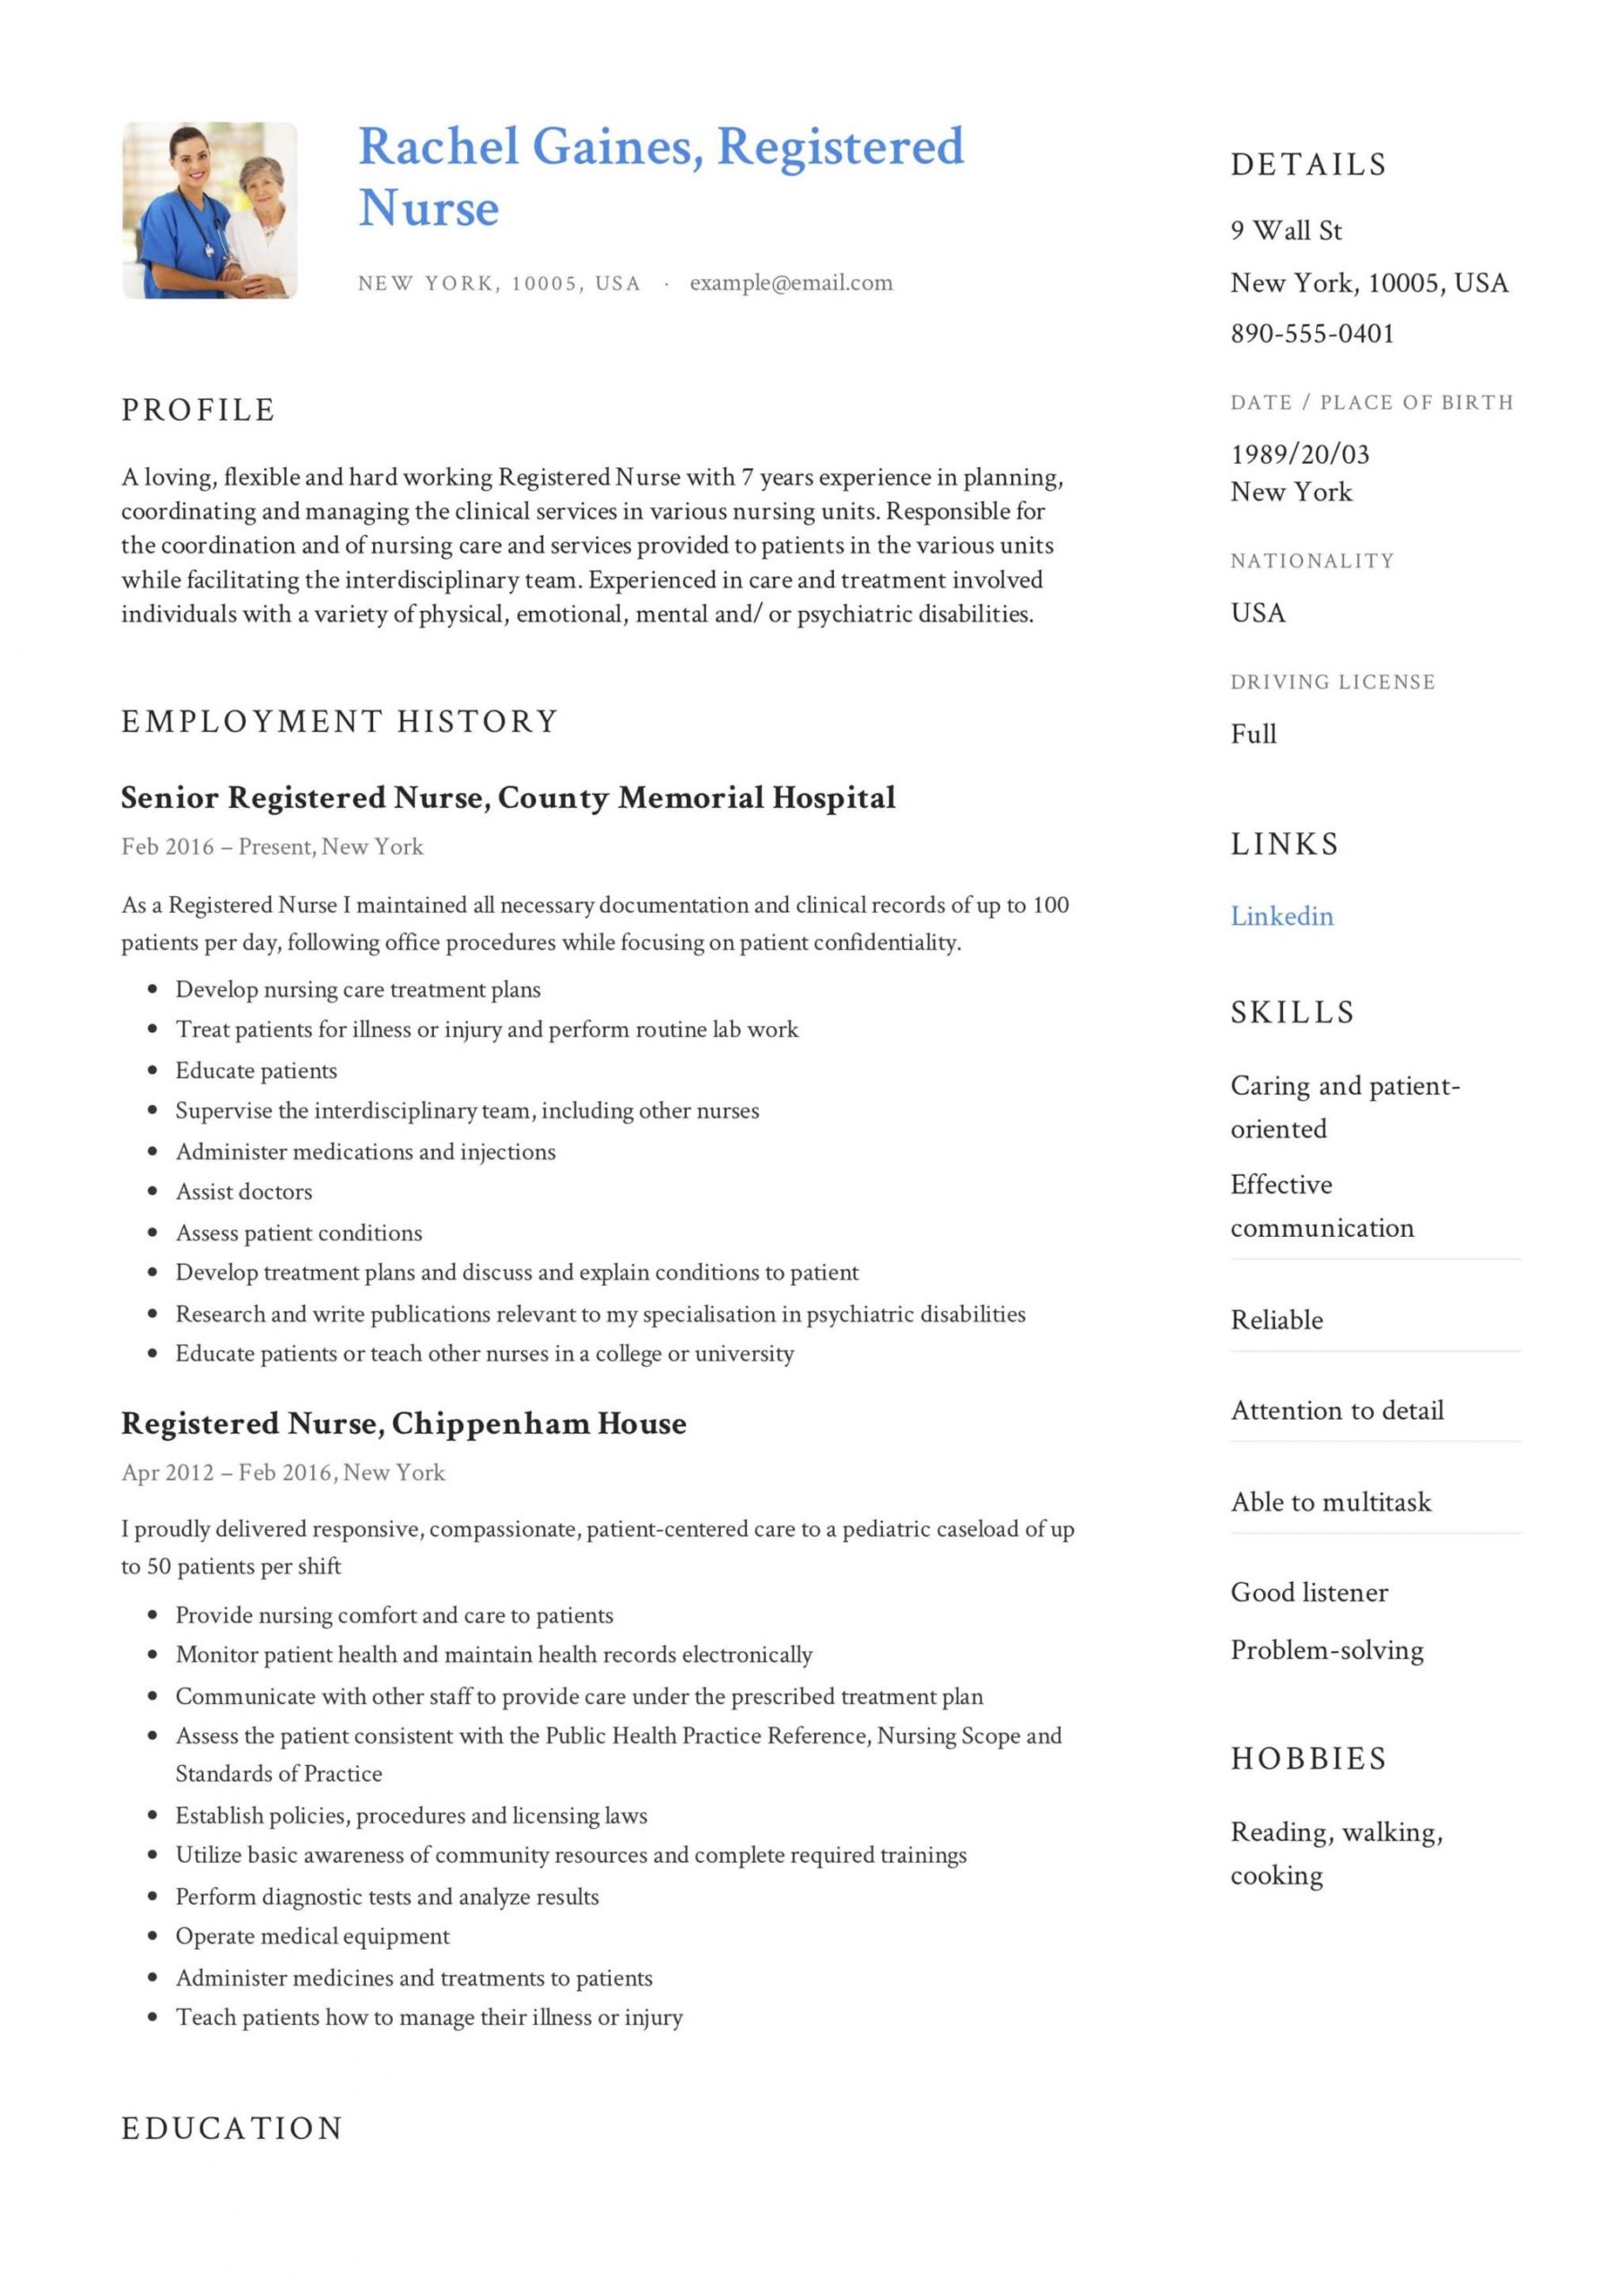 Sample Resume for Nurses with Experience Pdf Registered Nurse Resume Sample & Writing Guide